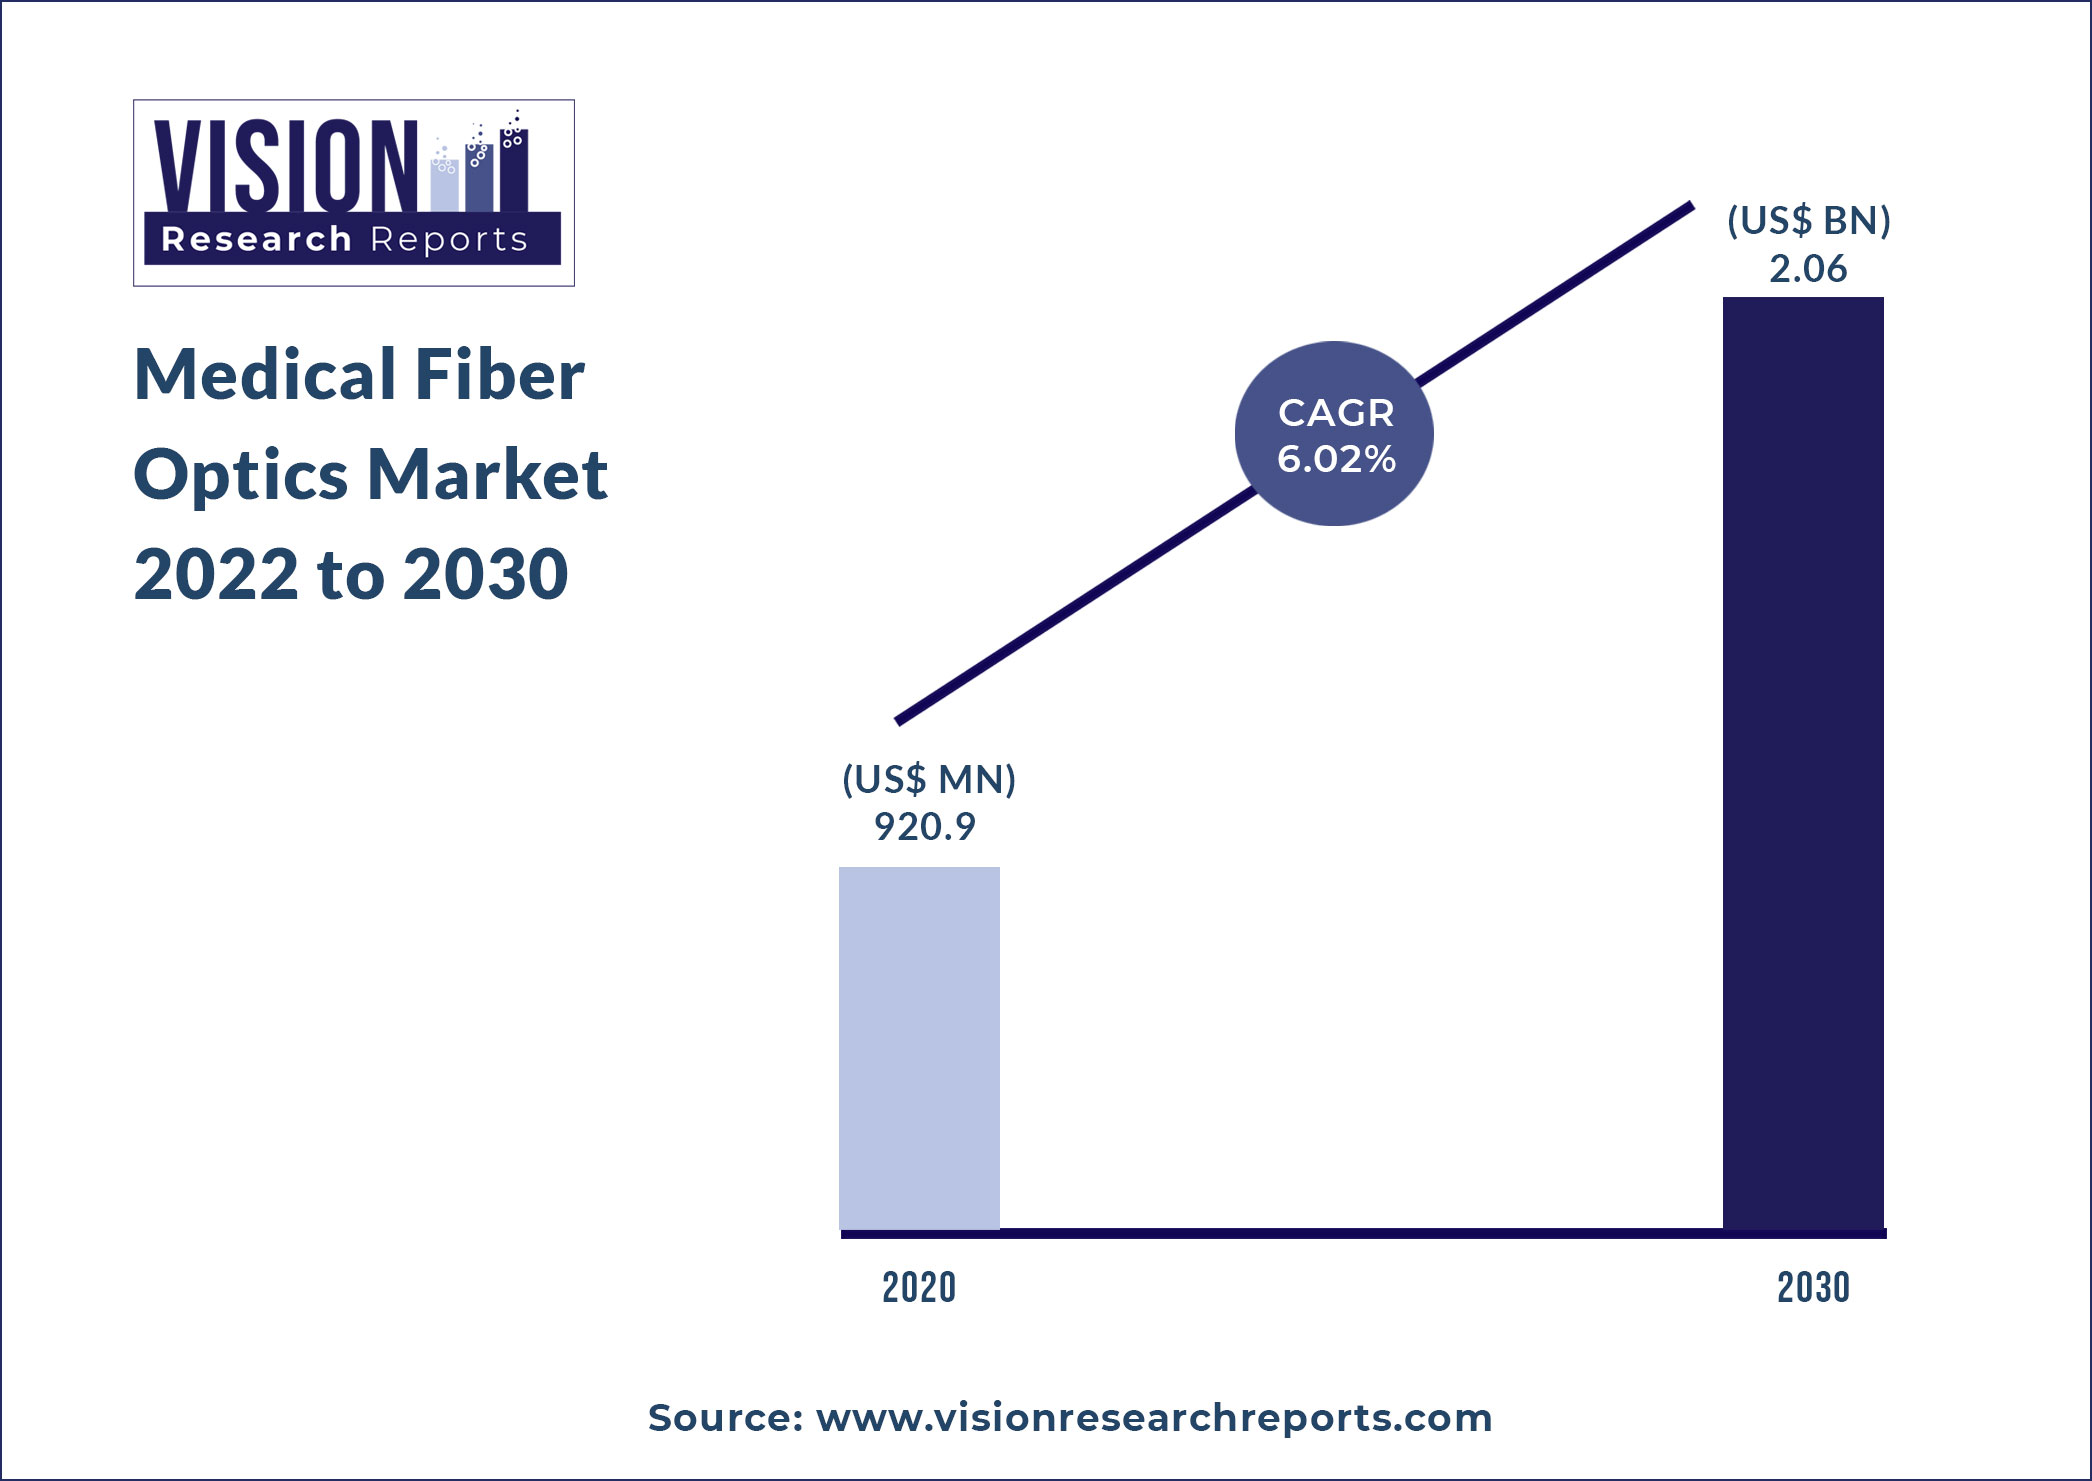 Medical Fiber Optics Market Size 2022 to 2030